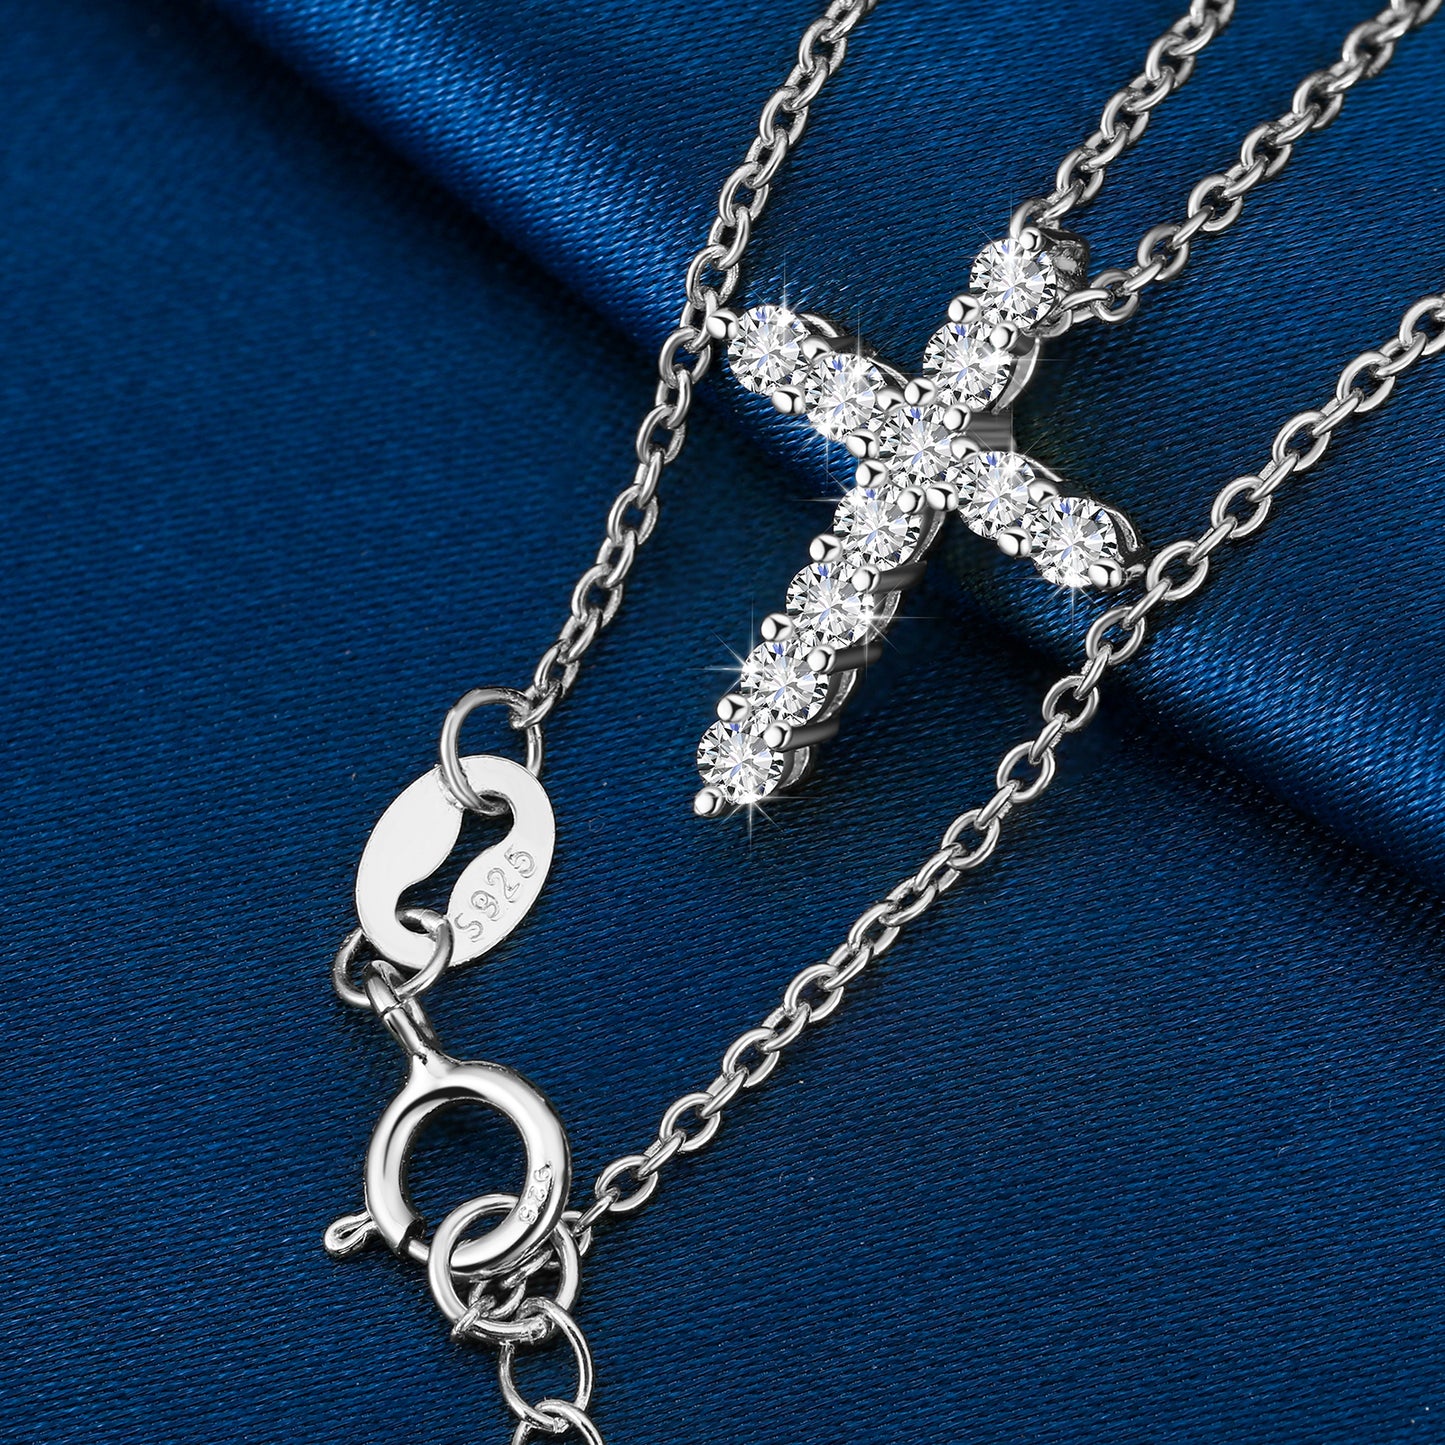 💯925 Sterling Silver VVS Moissanite Diamond Cross Tennis Pendant For Necklace Jewelry💯